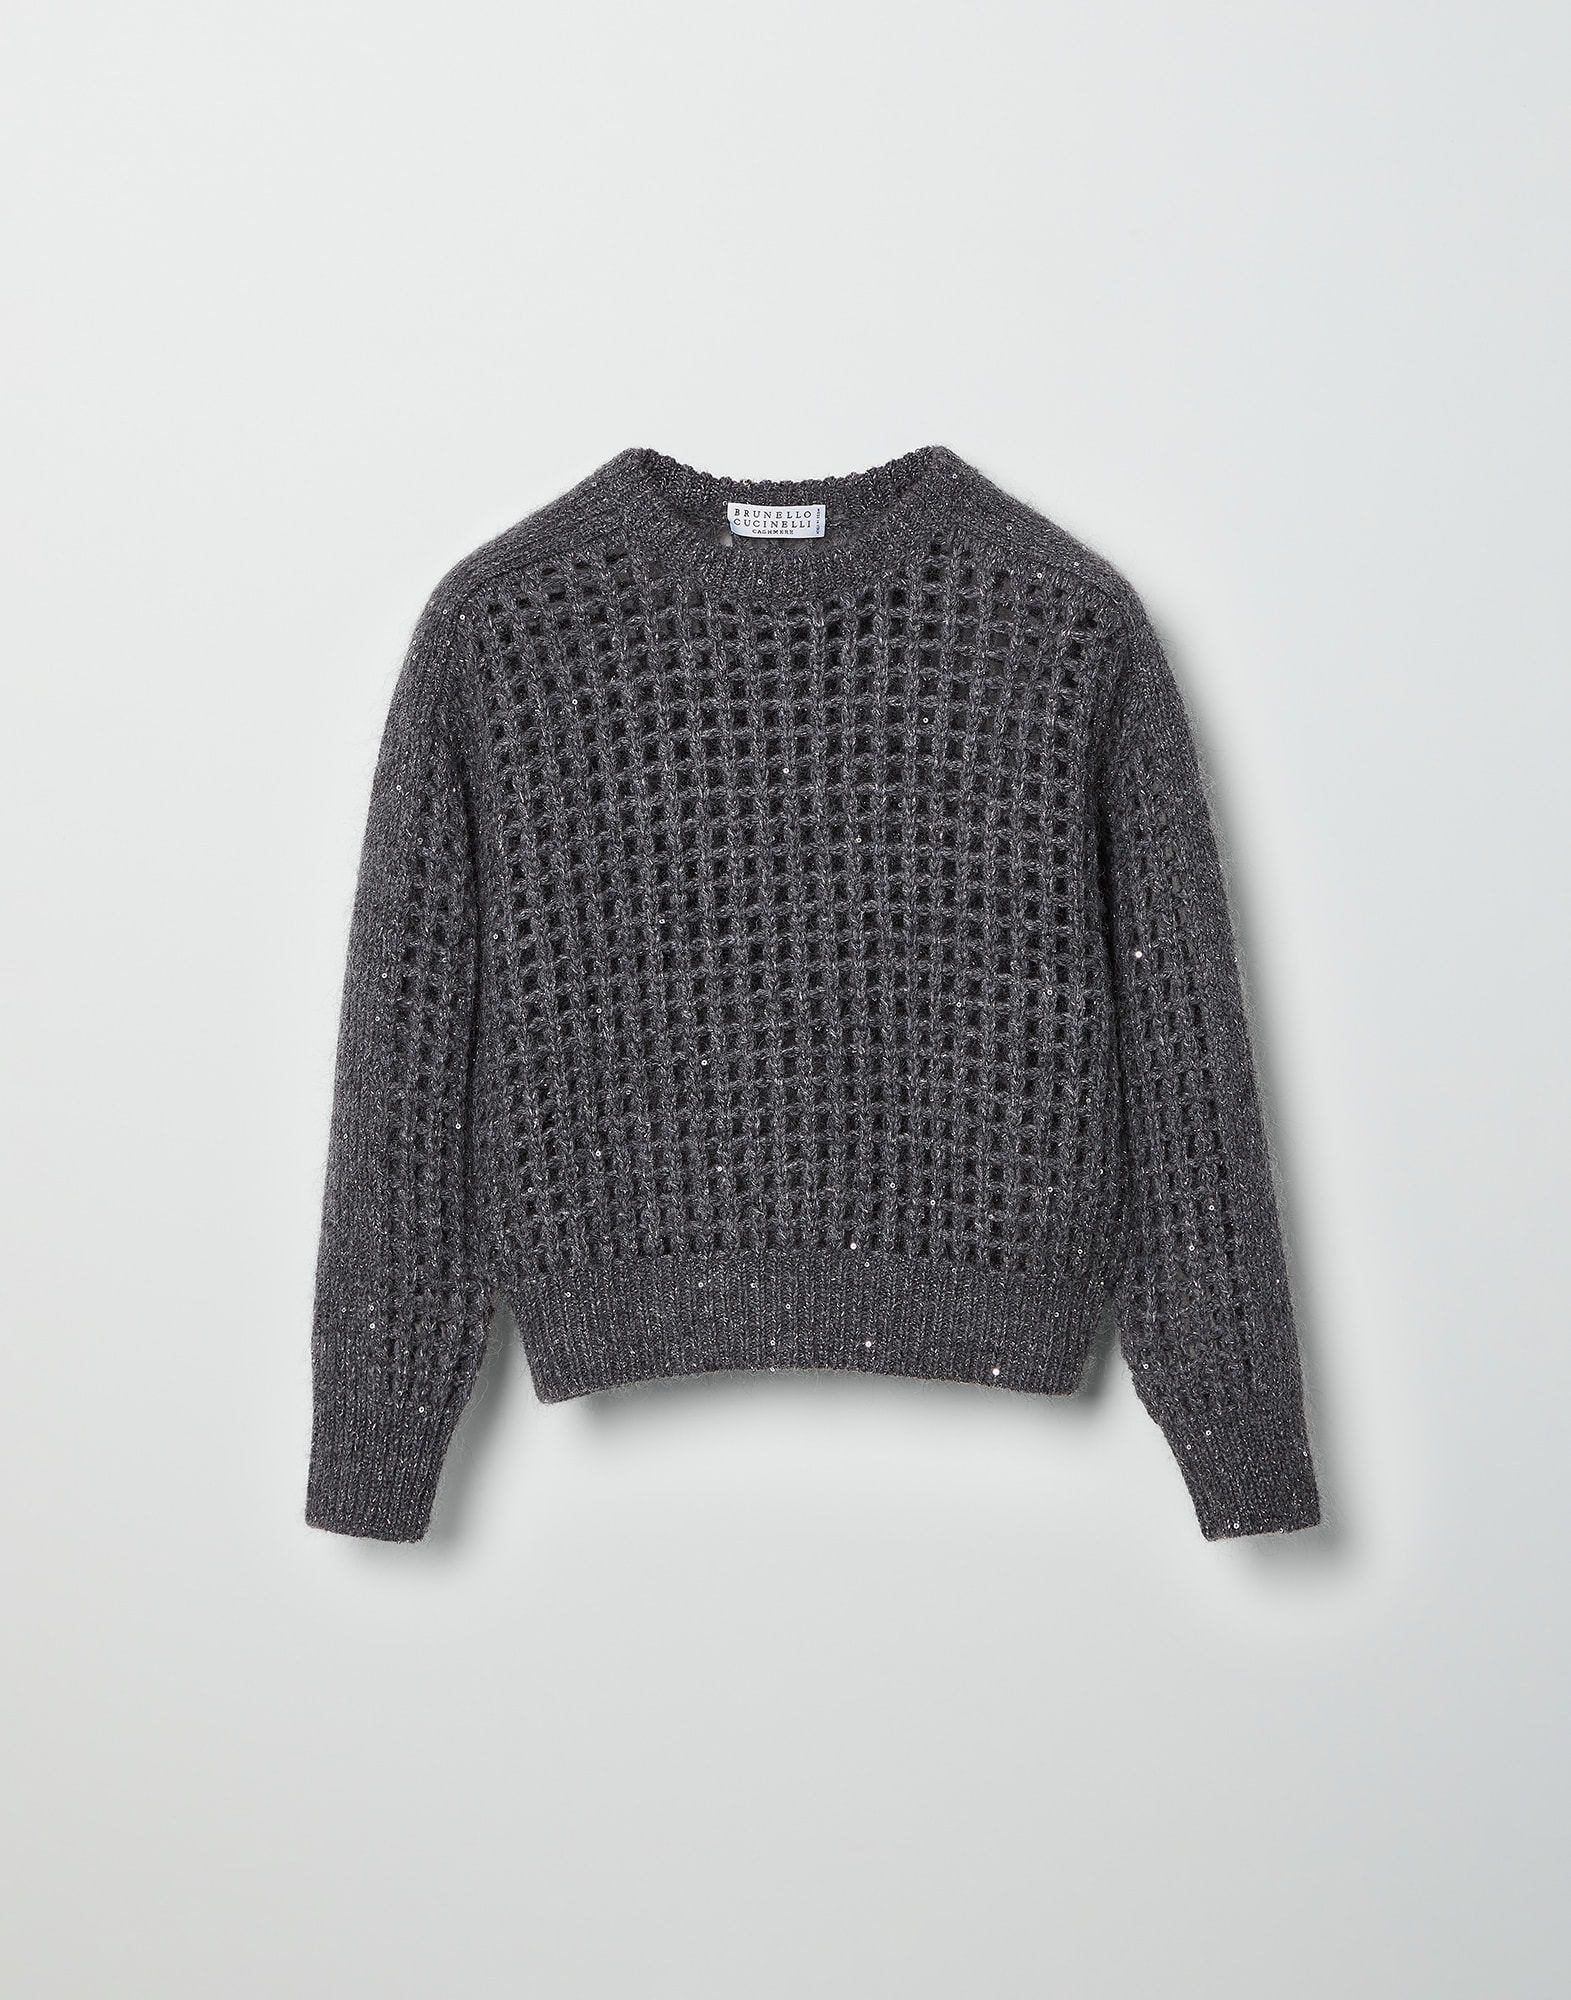 Sparkling Net sweater